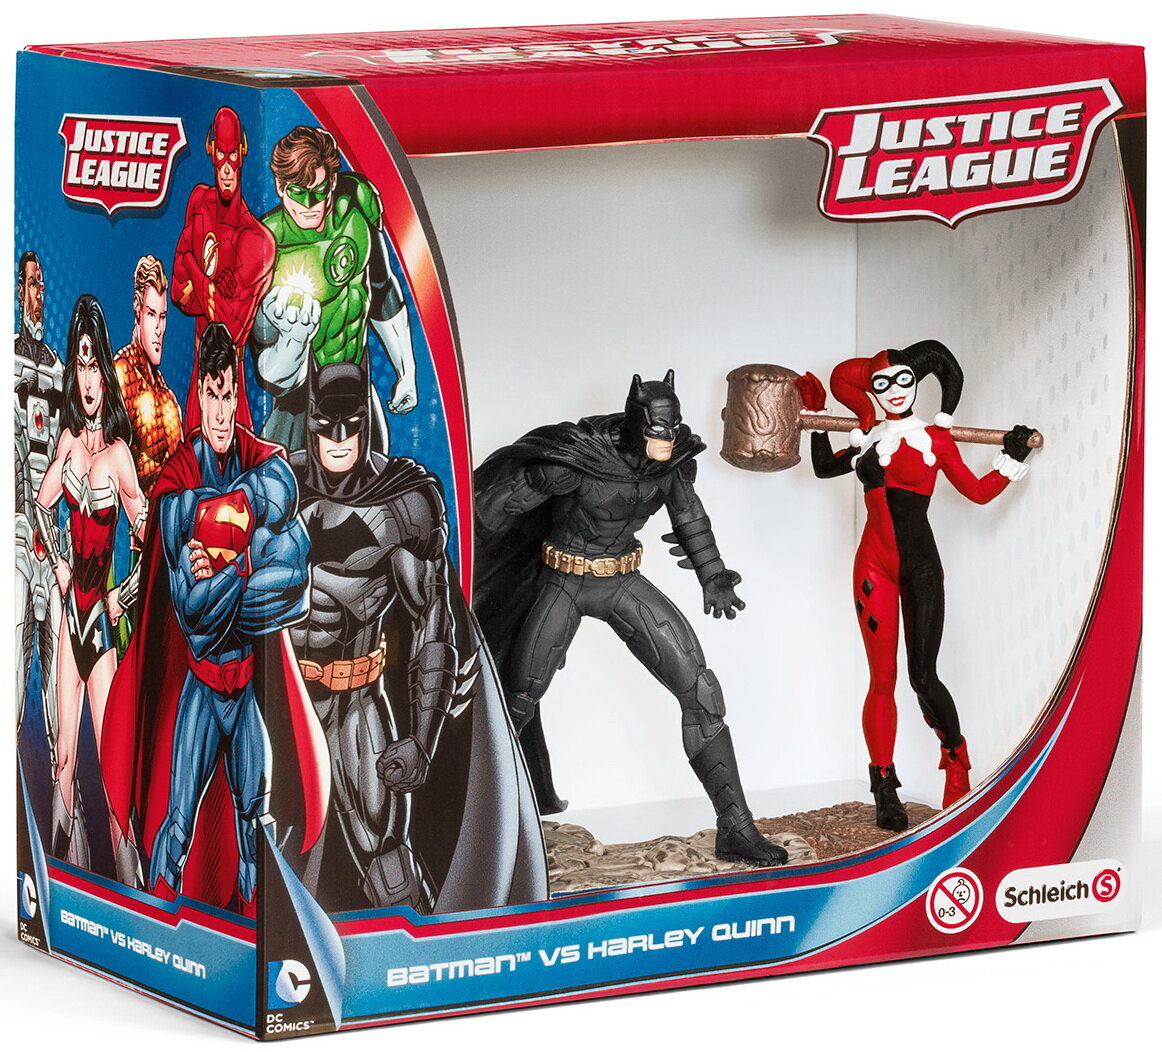 New in Box Schleich justice leagu Justice League Figurines Batman vs Joker 